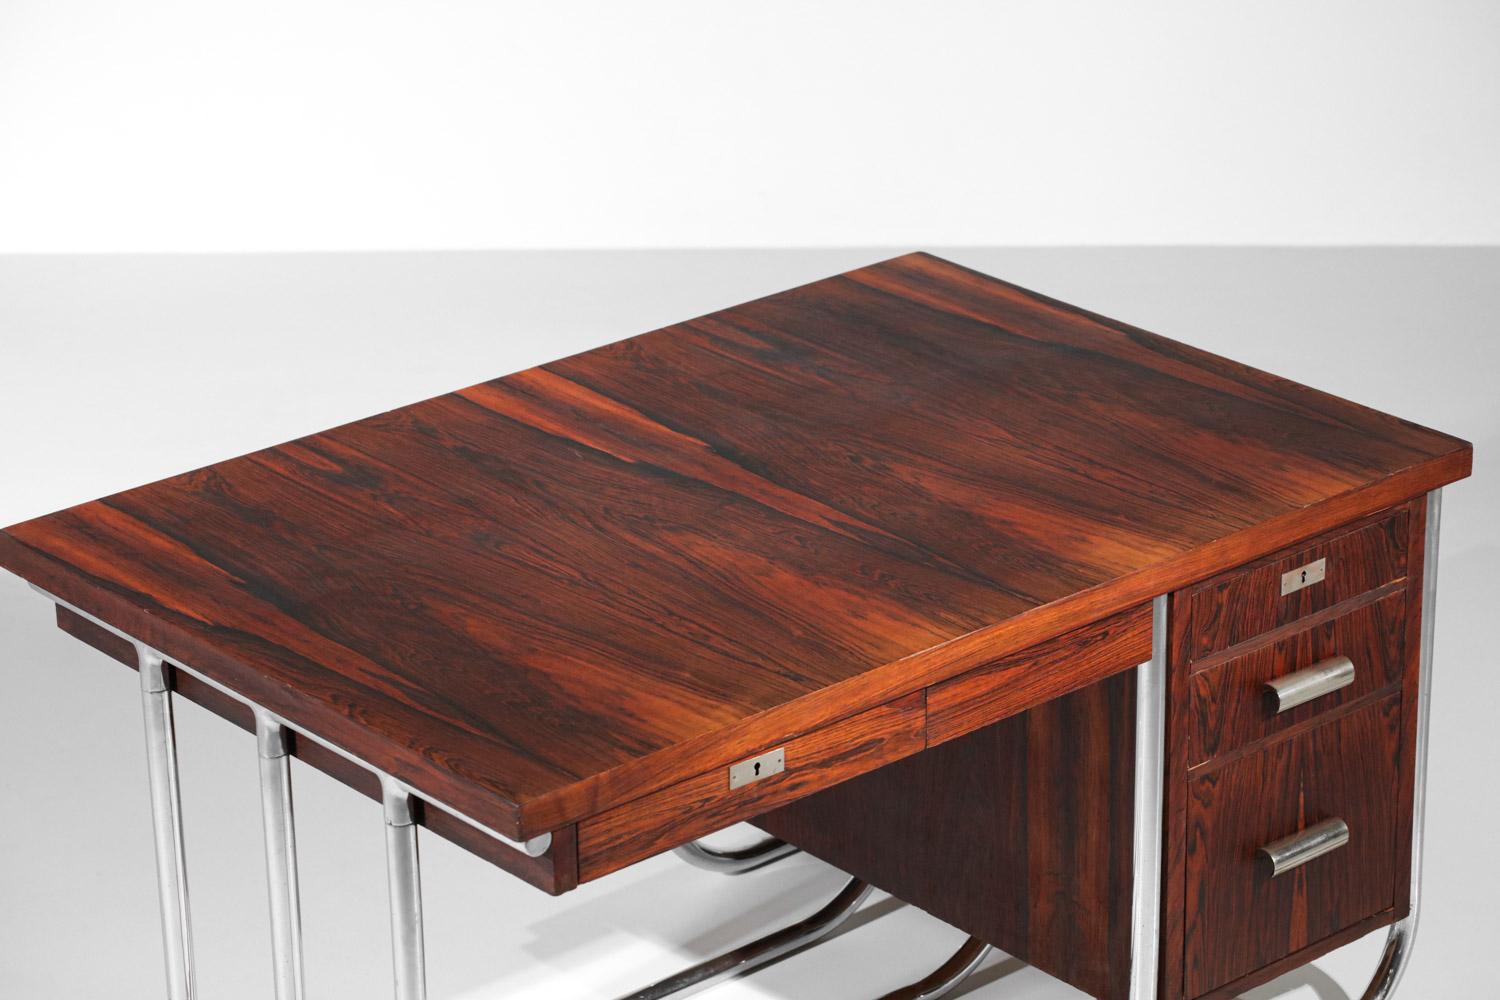 Chrome Modernist Desk in Solid Wood 40s / 50s Bauhaus Style Vintage For Sale